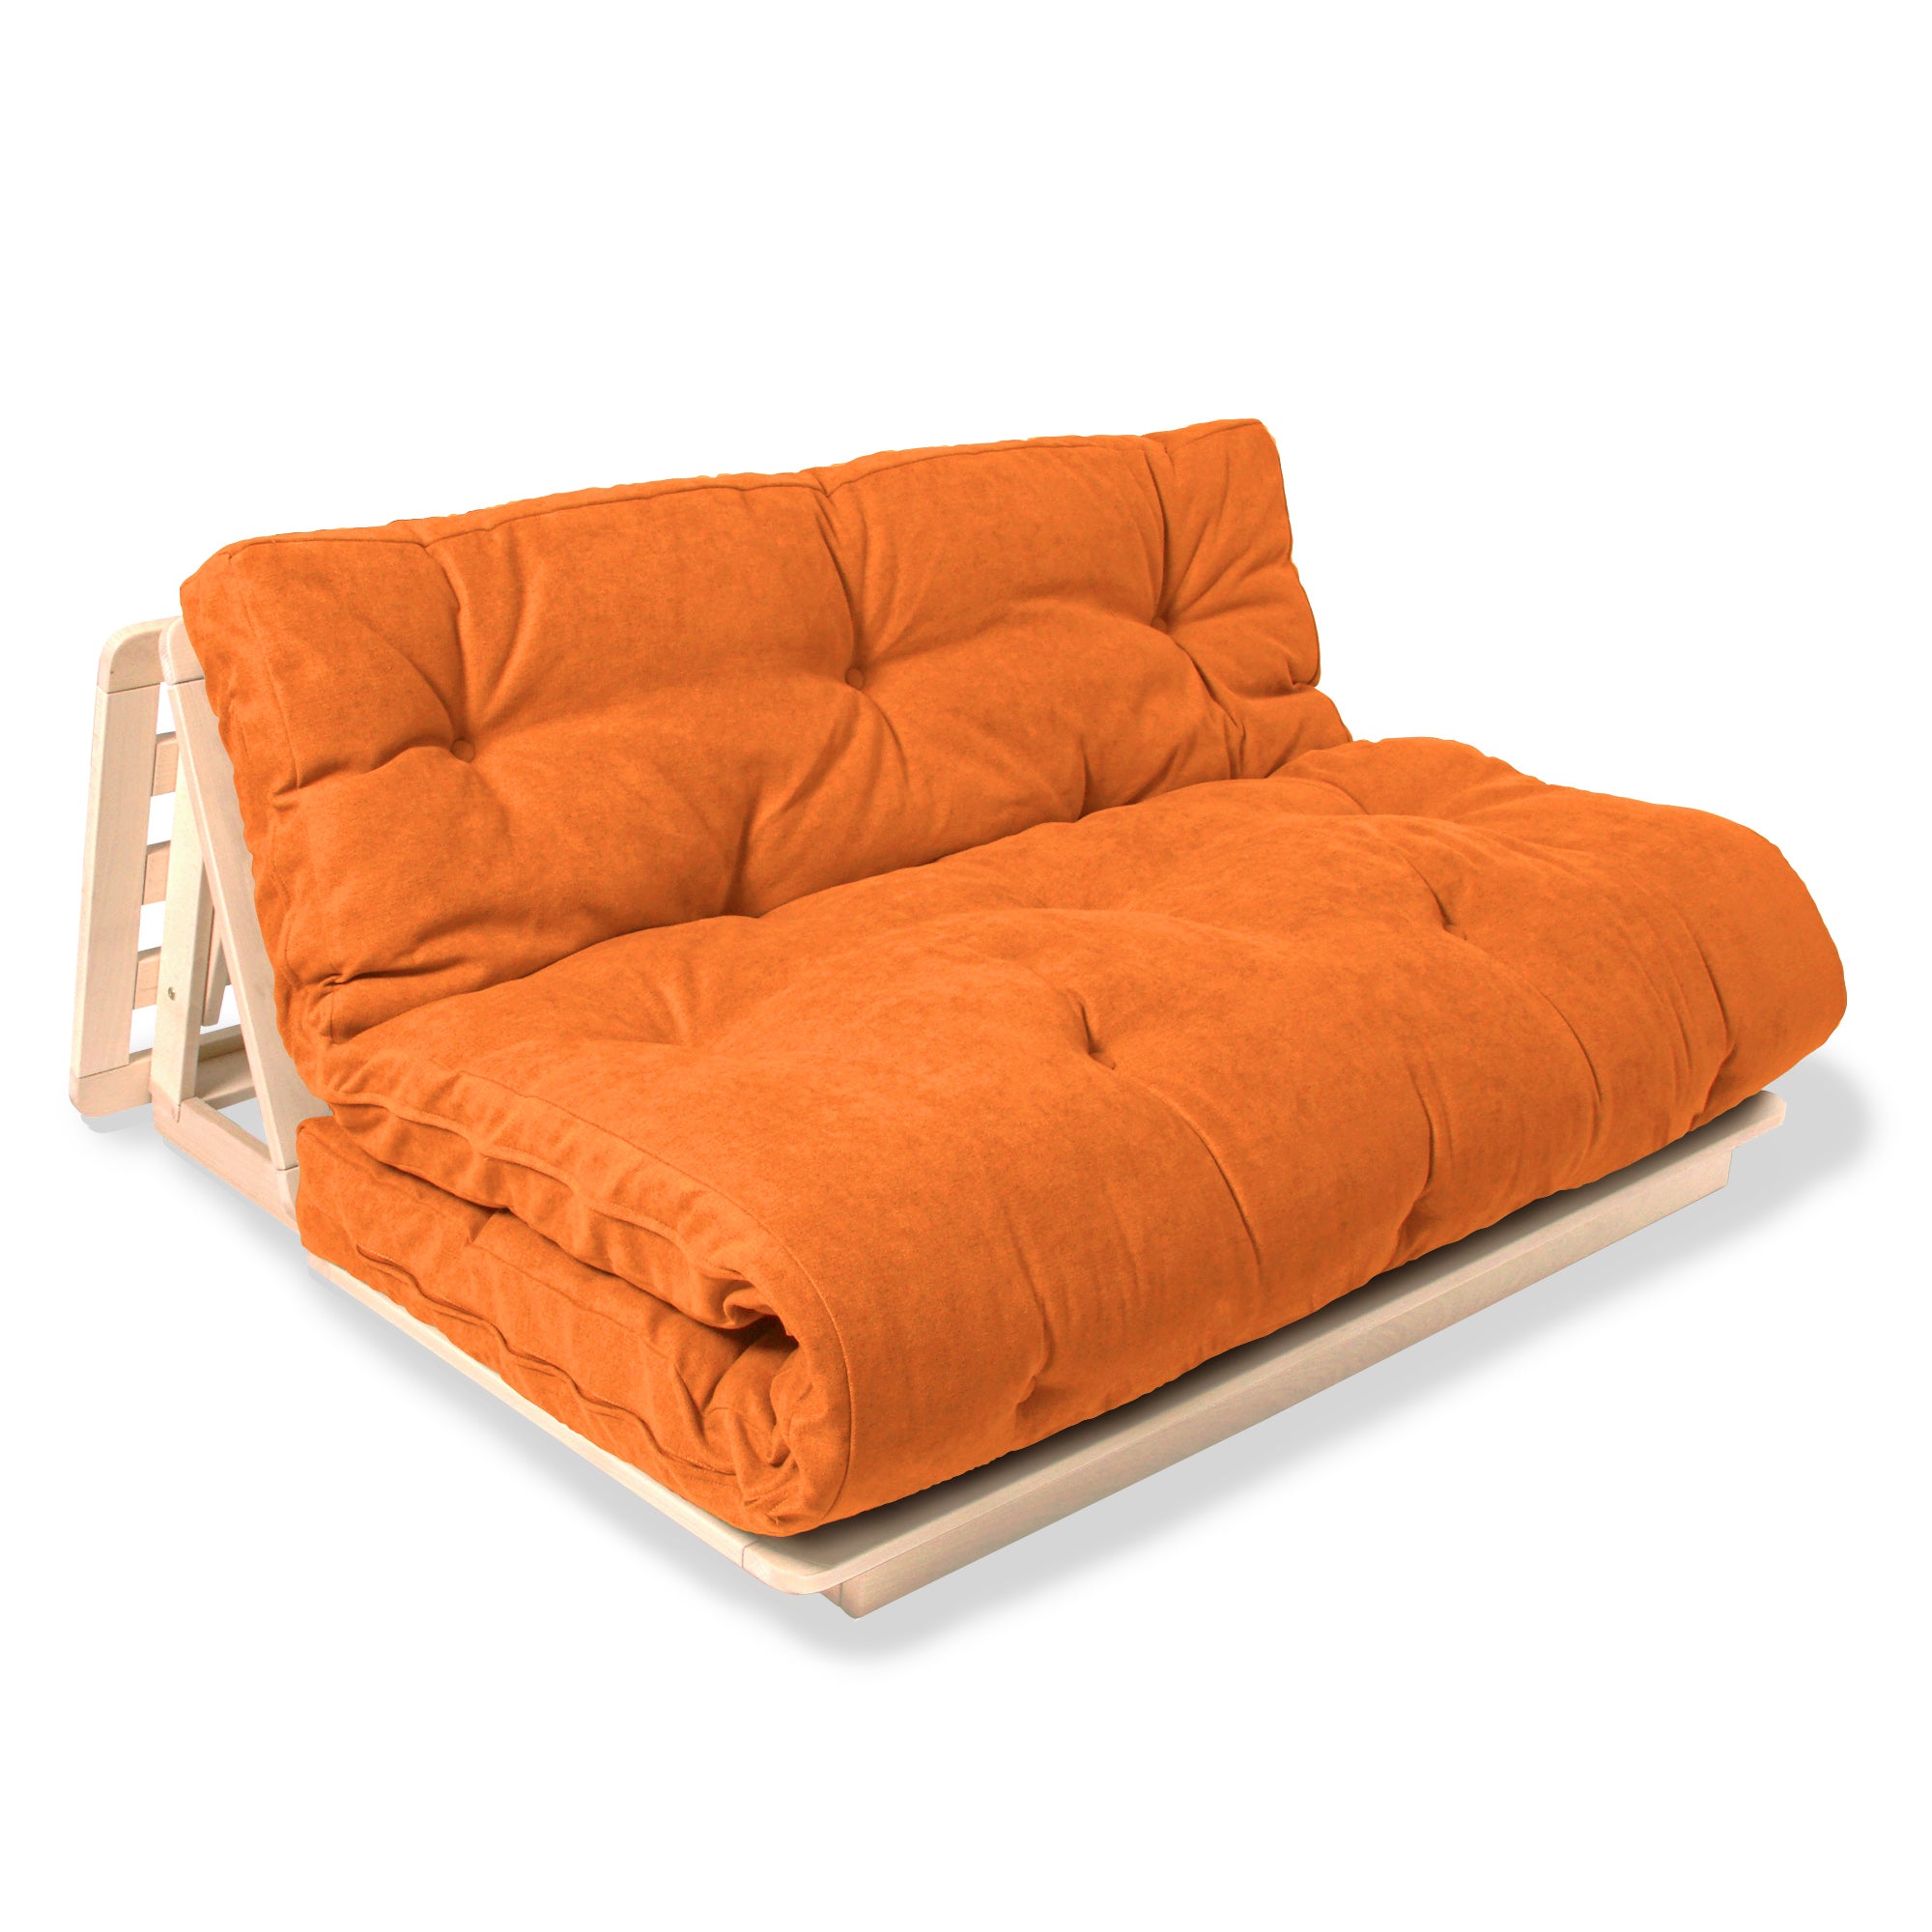 LAYTI-140 Futon Chair, Beech Wood, Natural Colour-orange fabric